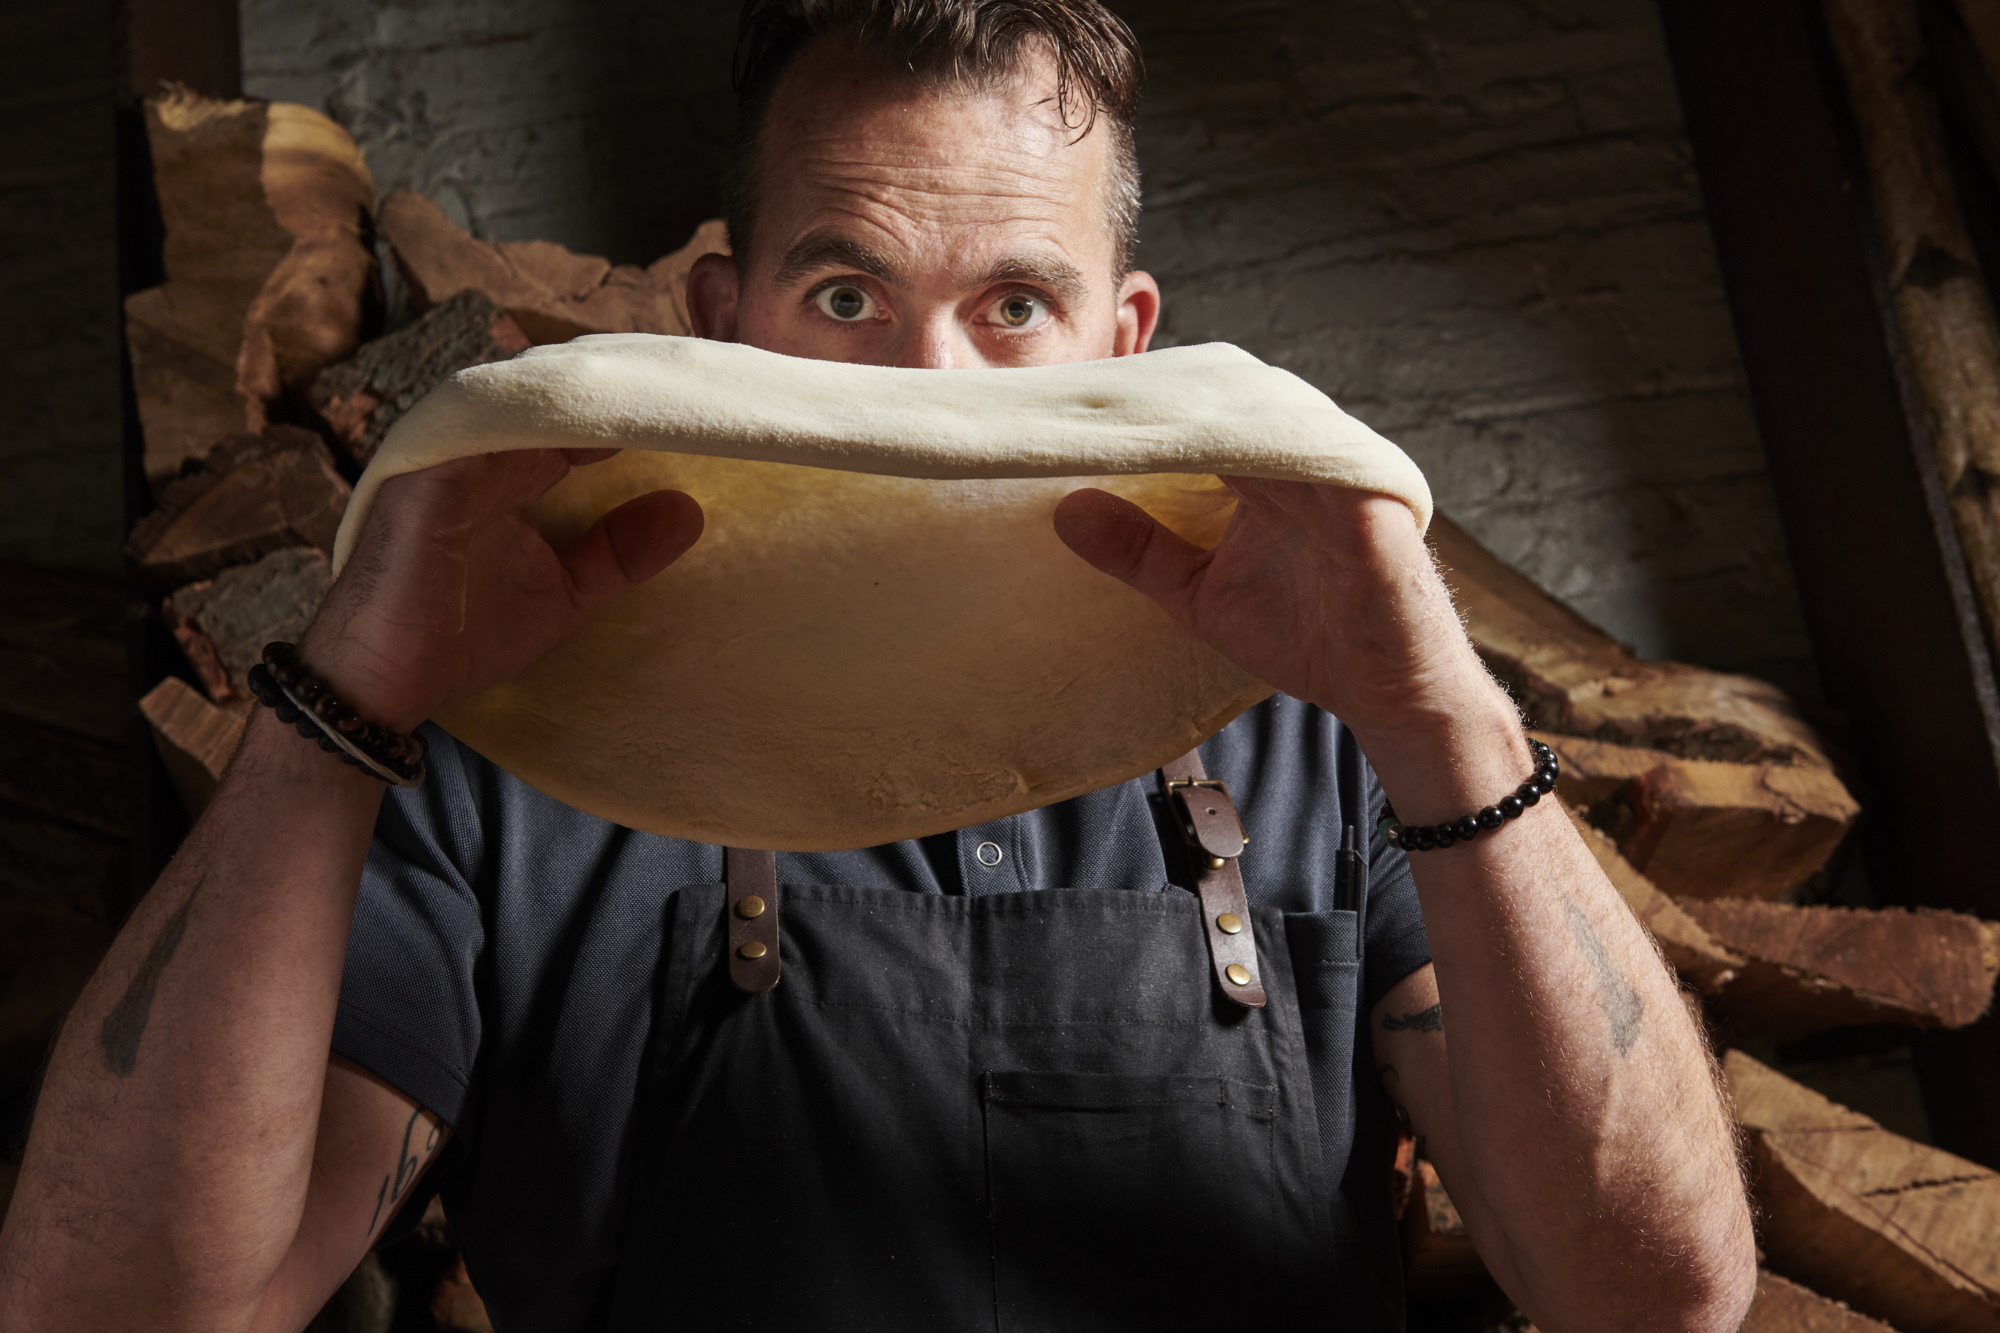 Marc Forgione with pinsa dough